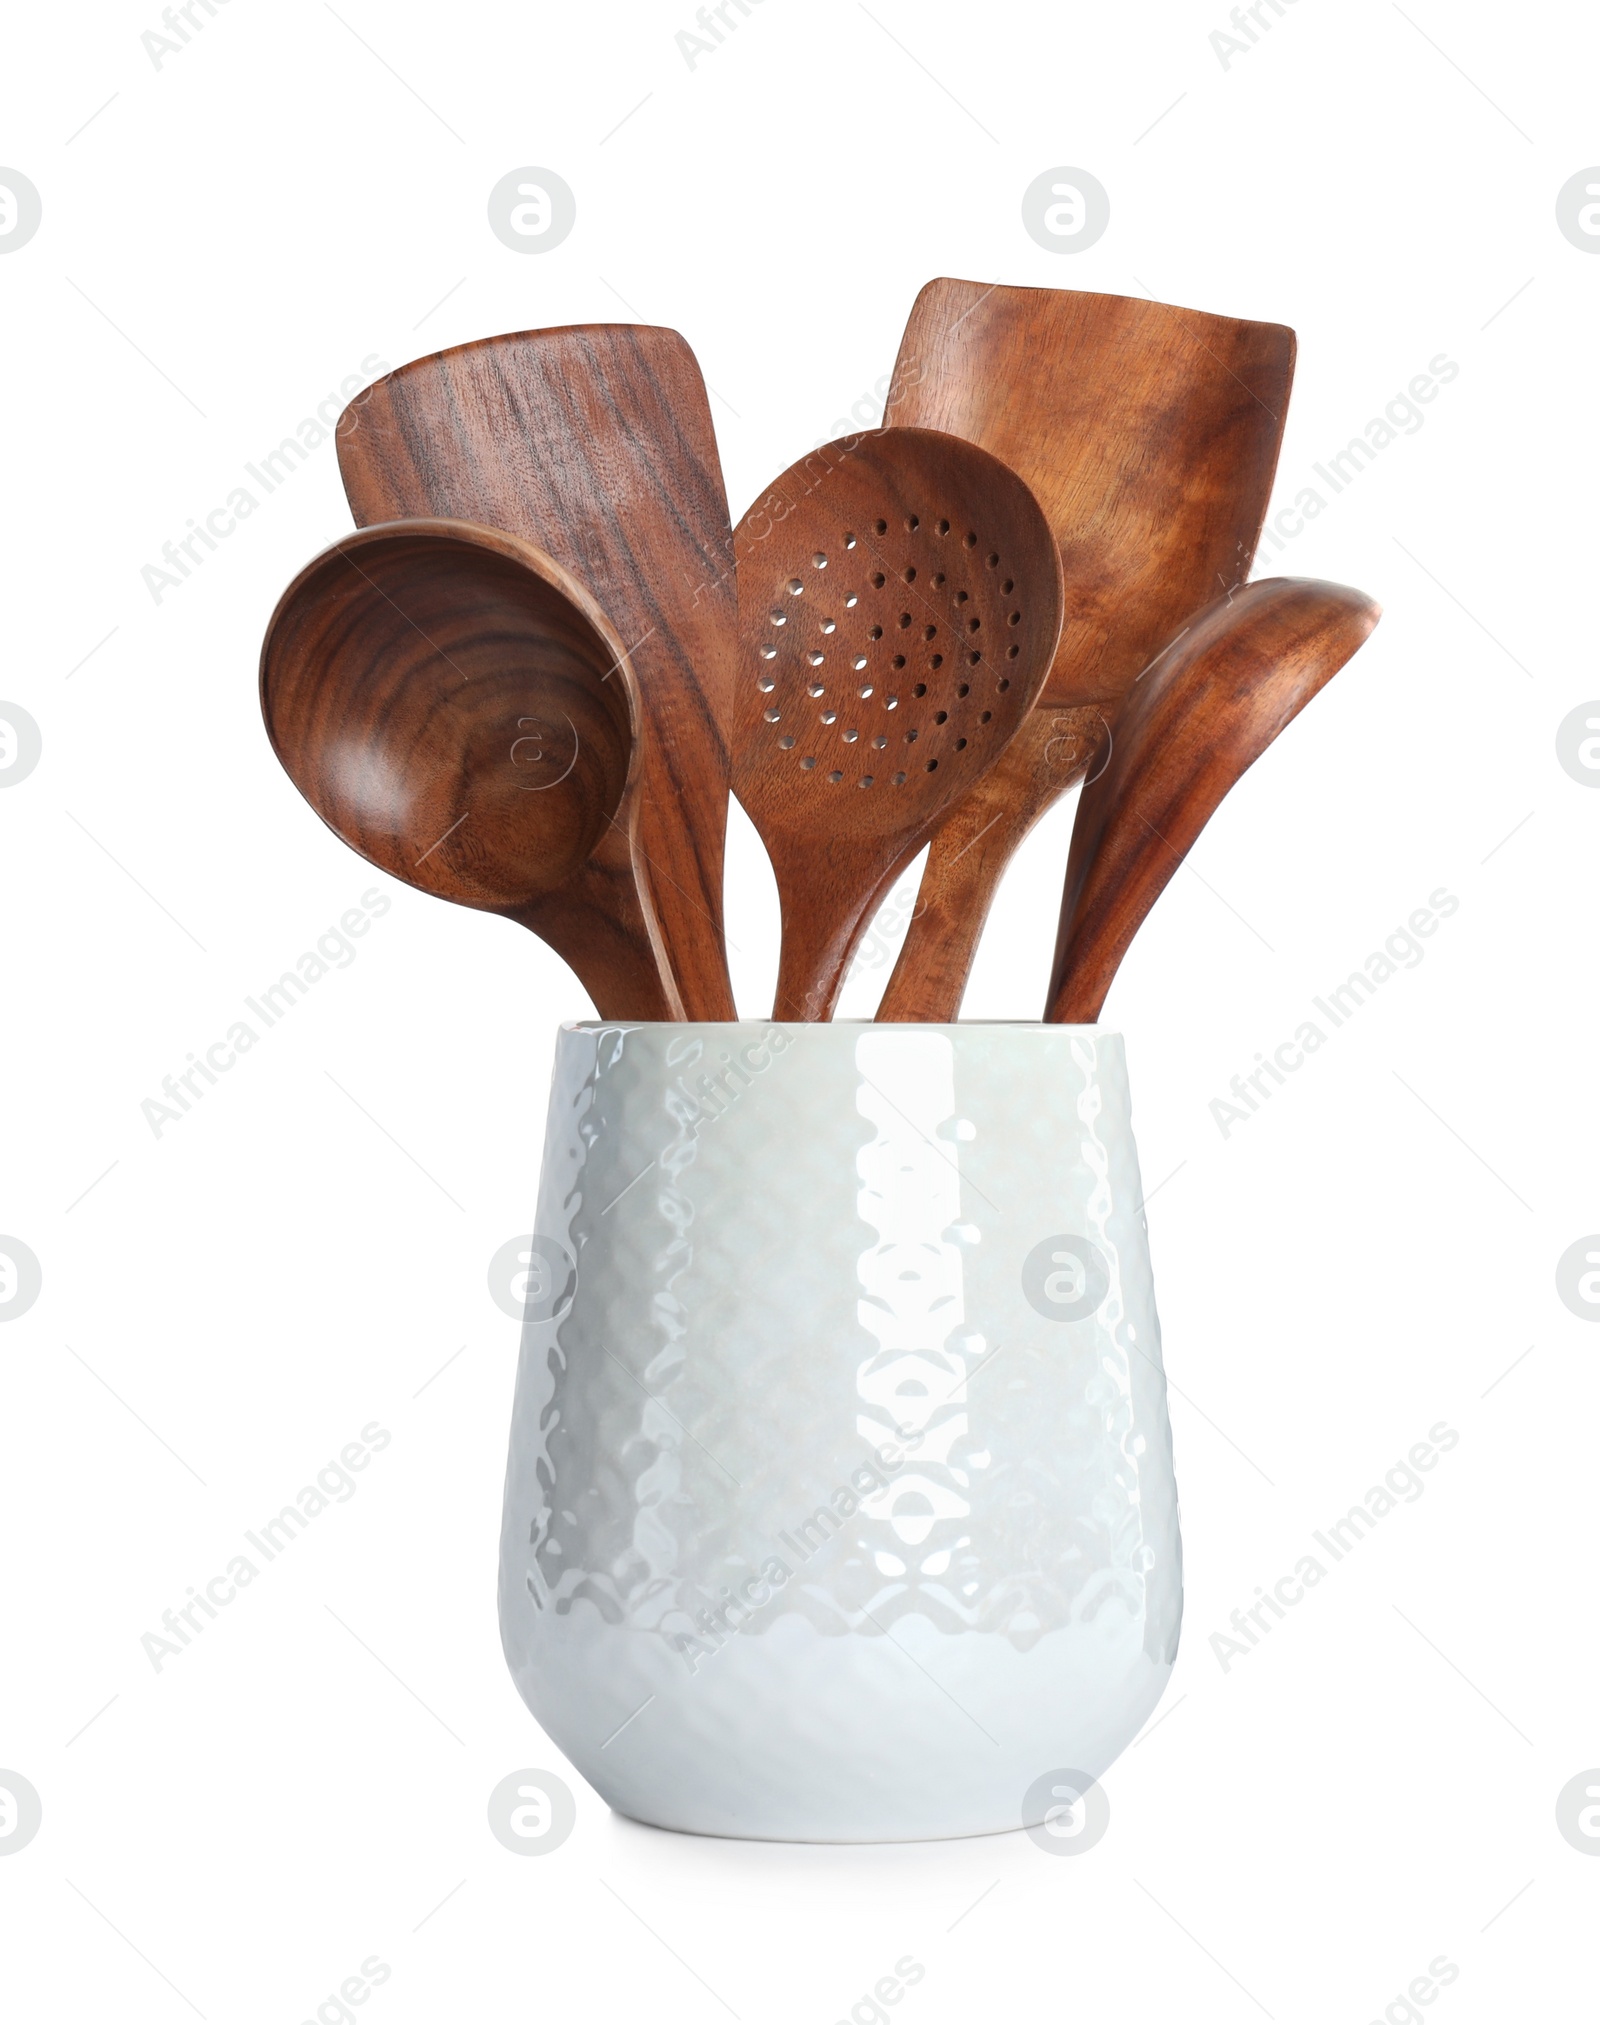 Photo of Set of kitchen utensils in holder on white background